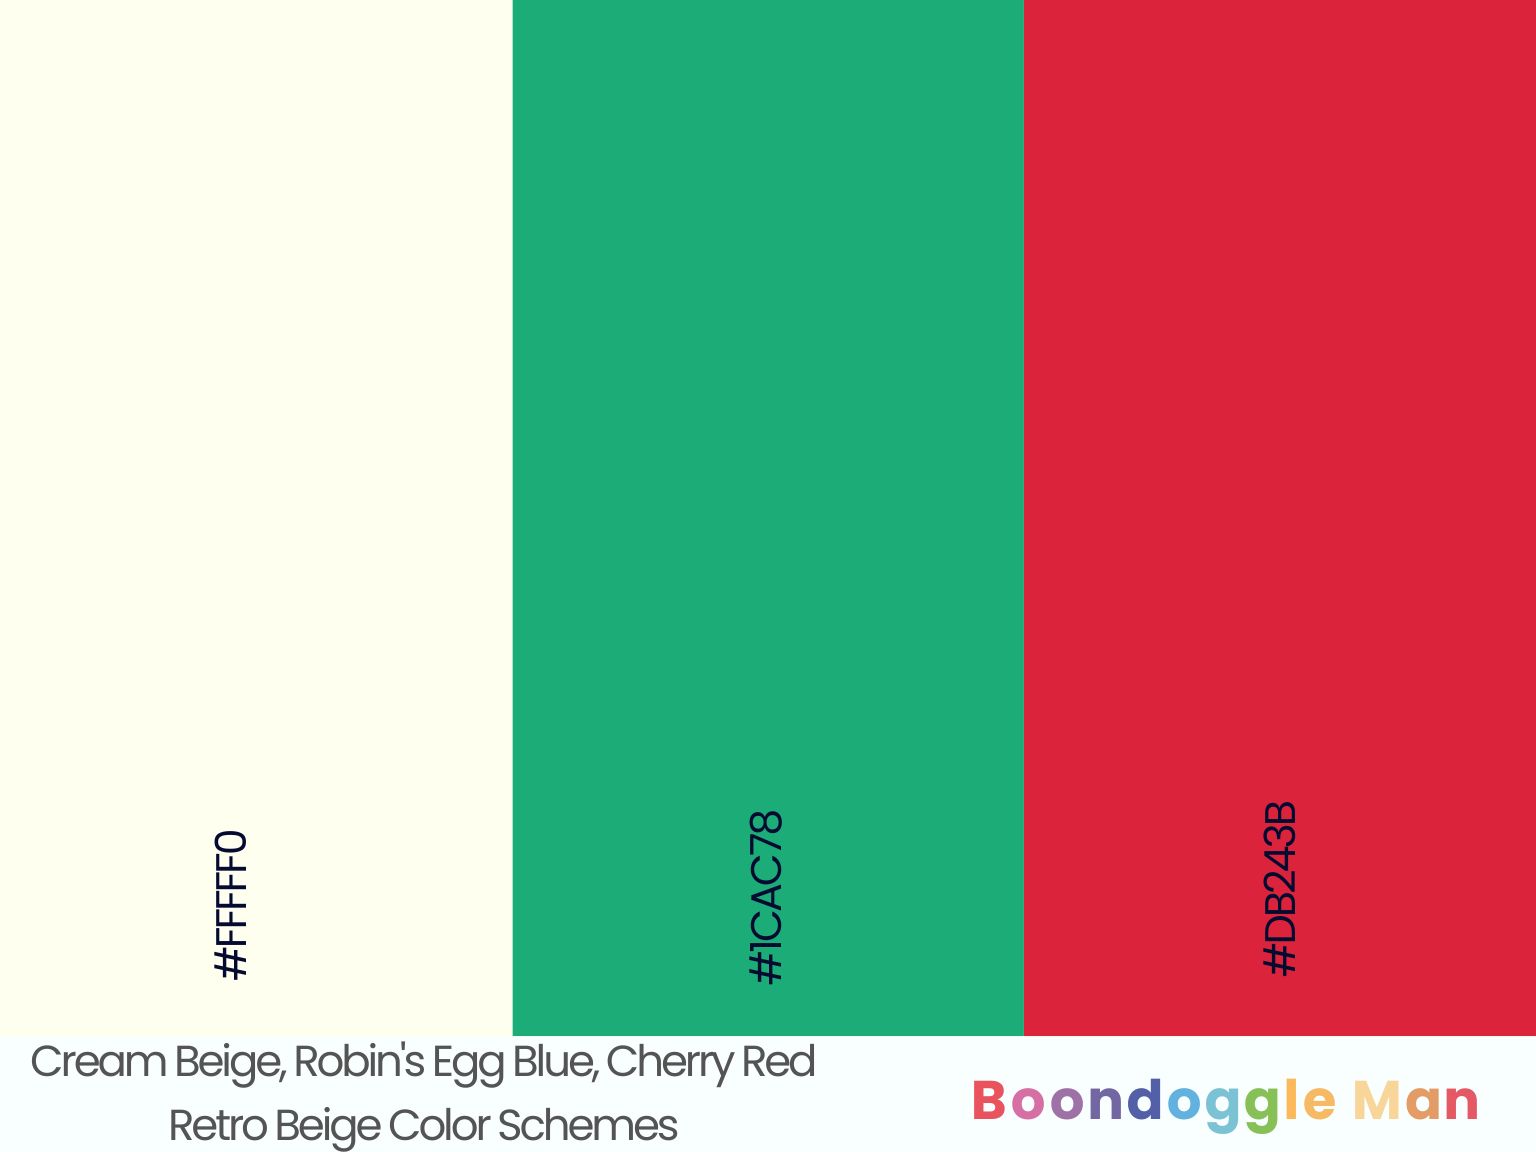 Cream Beige, Robin's Egg Blue, Cherry Red